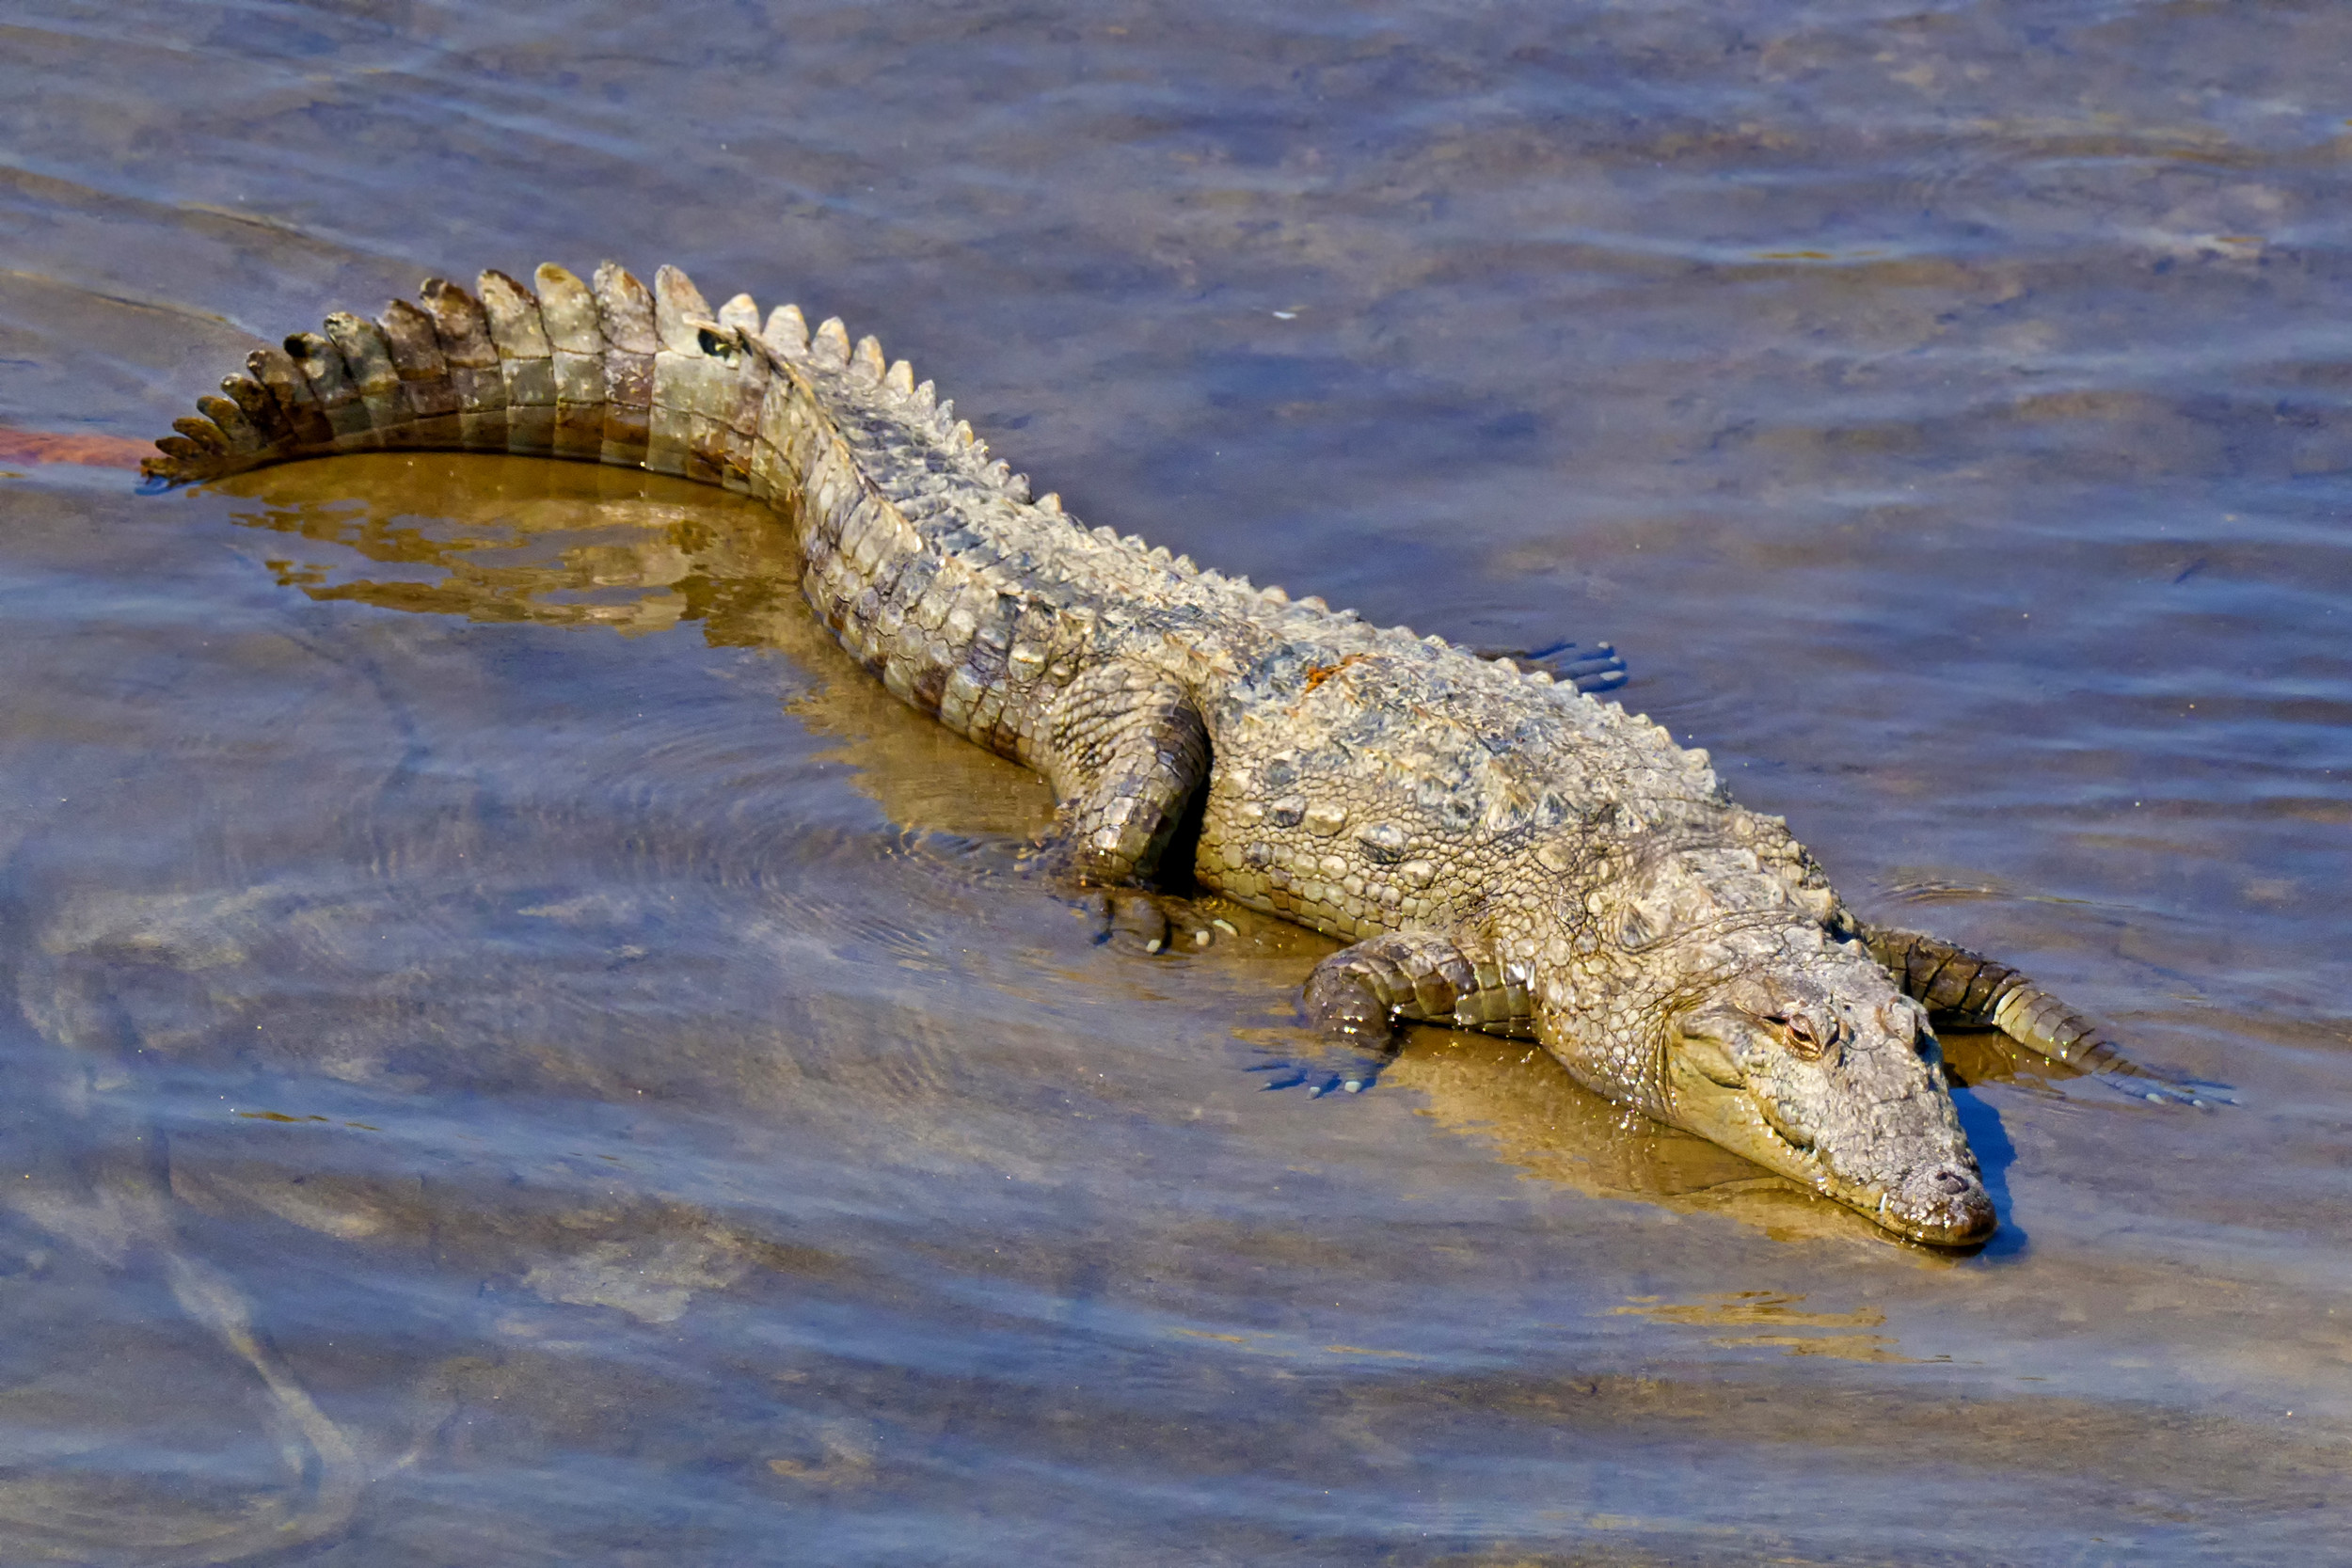 Fisherman accidentally hooks crocodile, struggles to get lure back